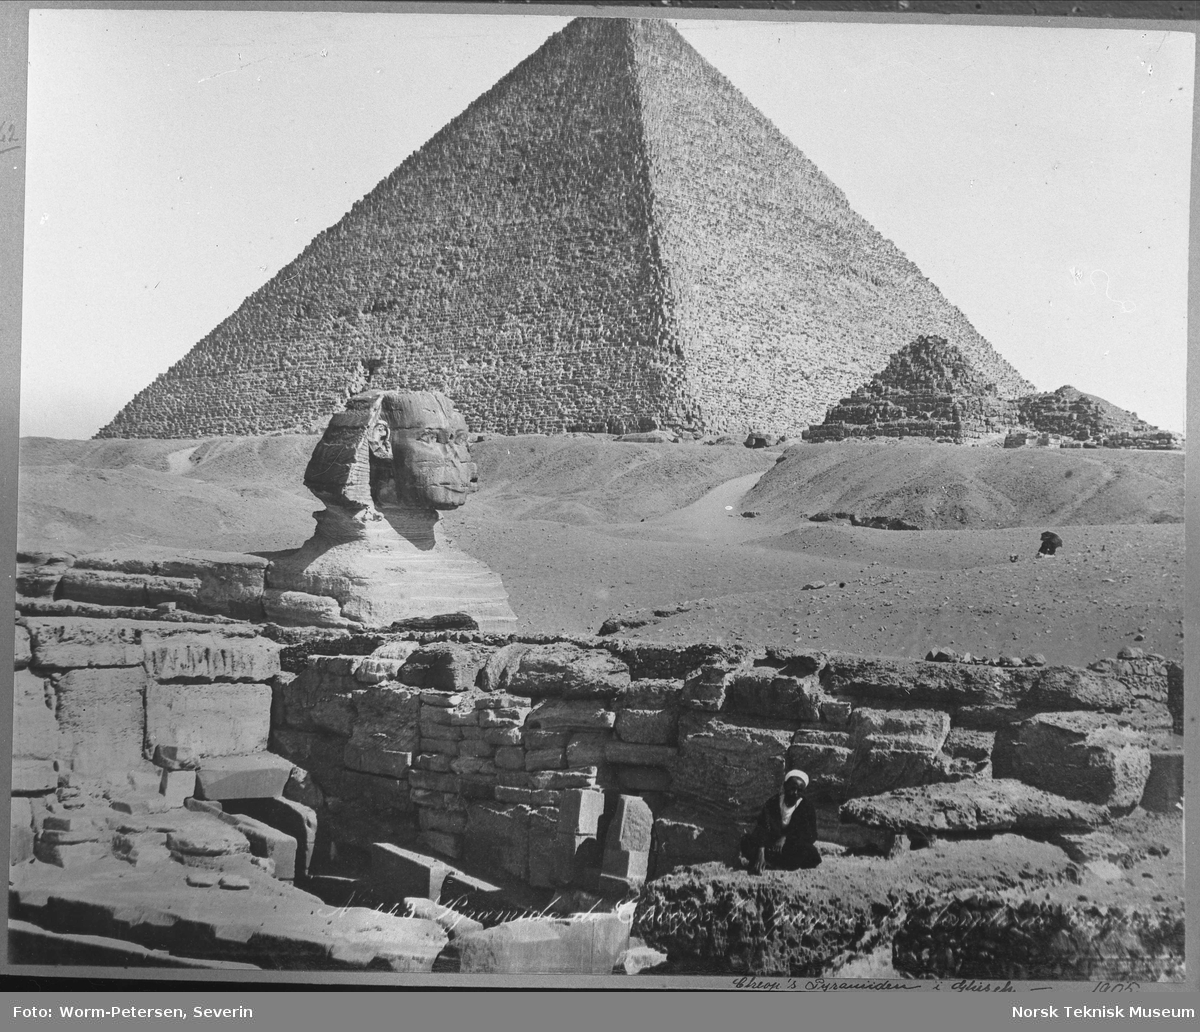 Stor pyramide i Egypt